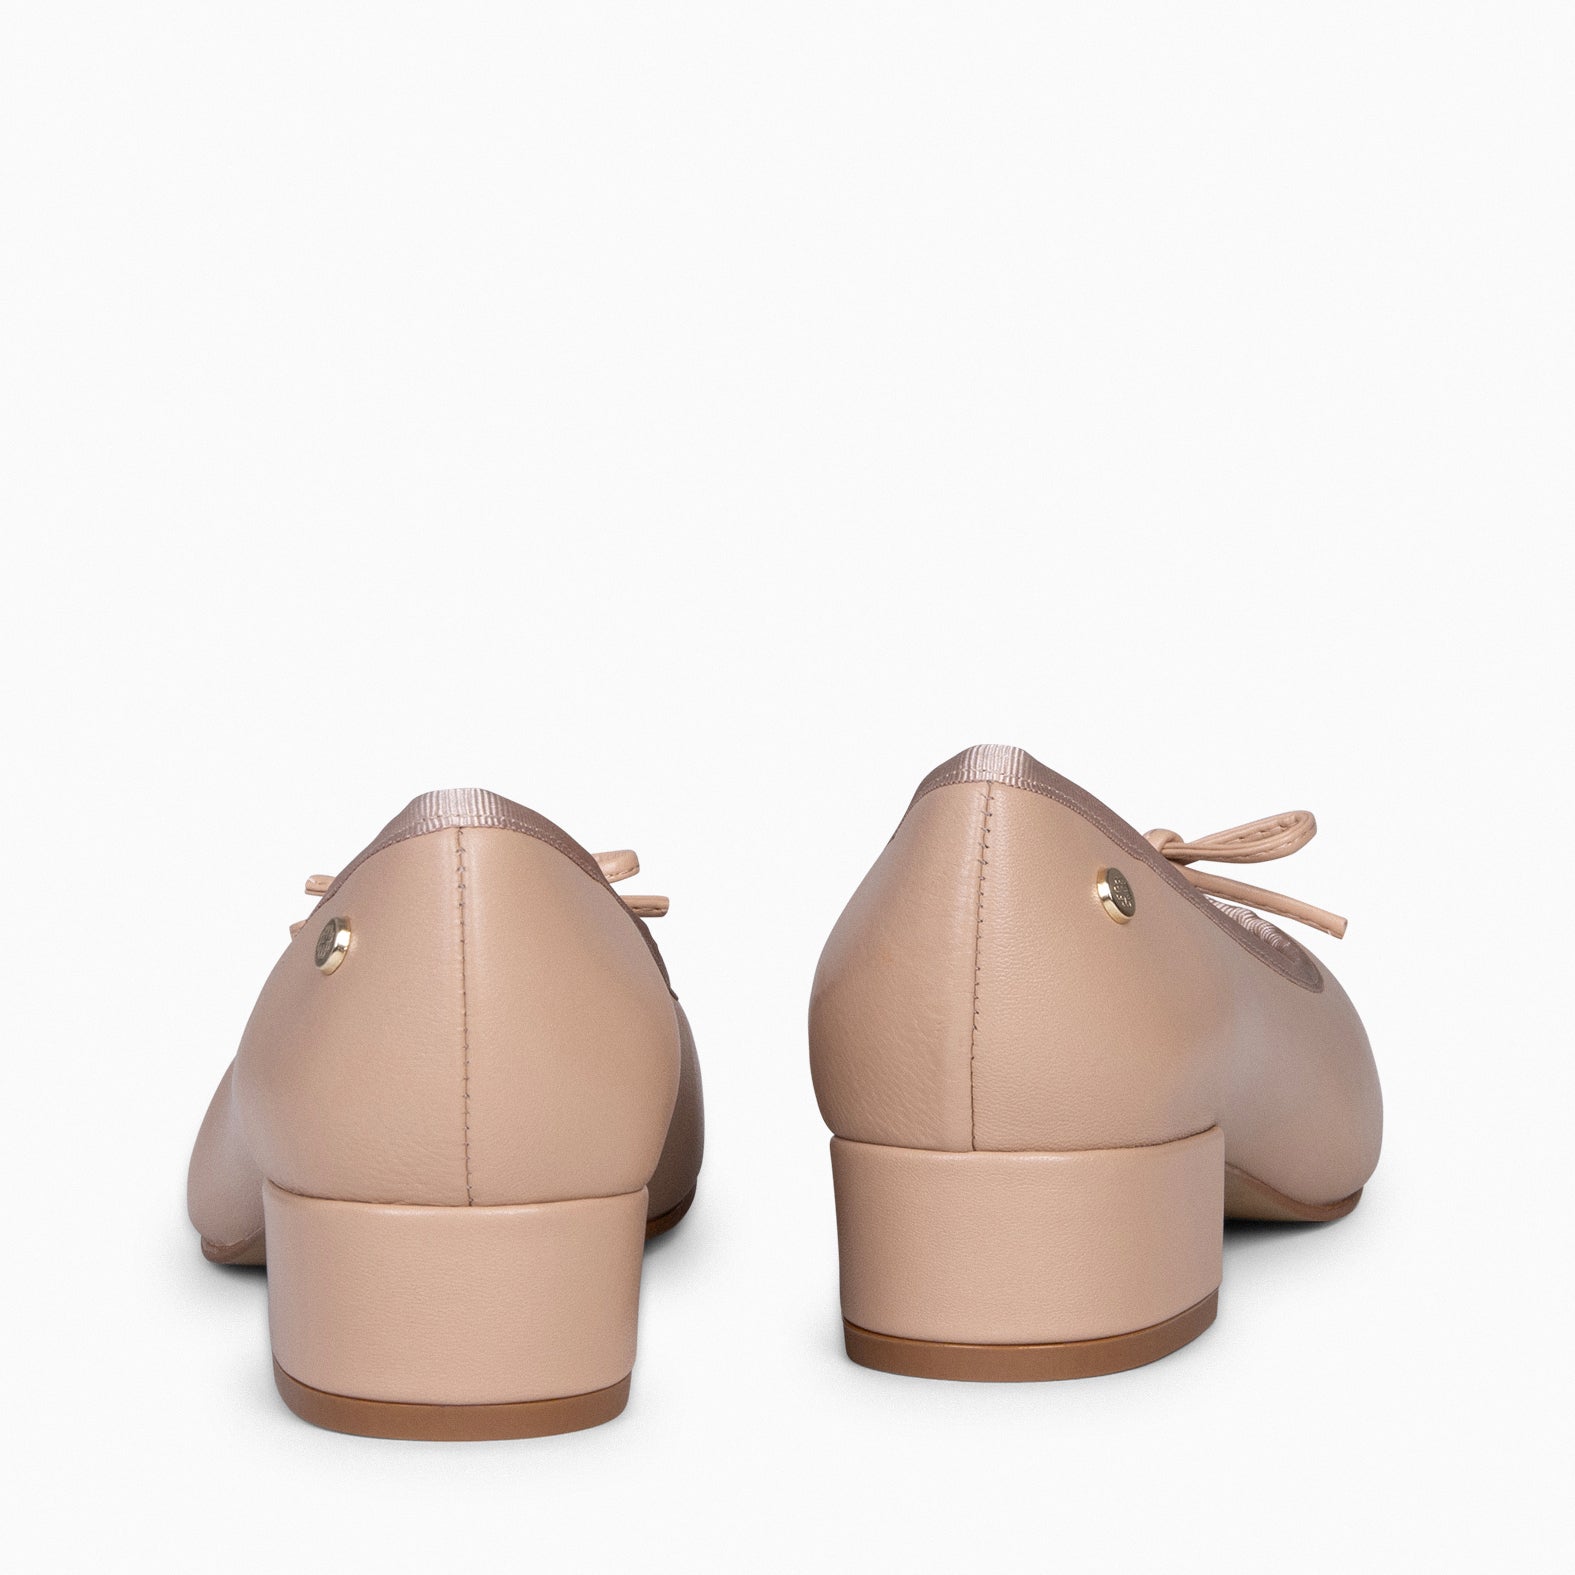 OPERA – NUDE ballerina with heel